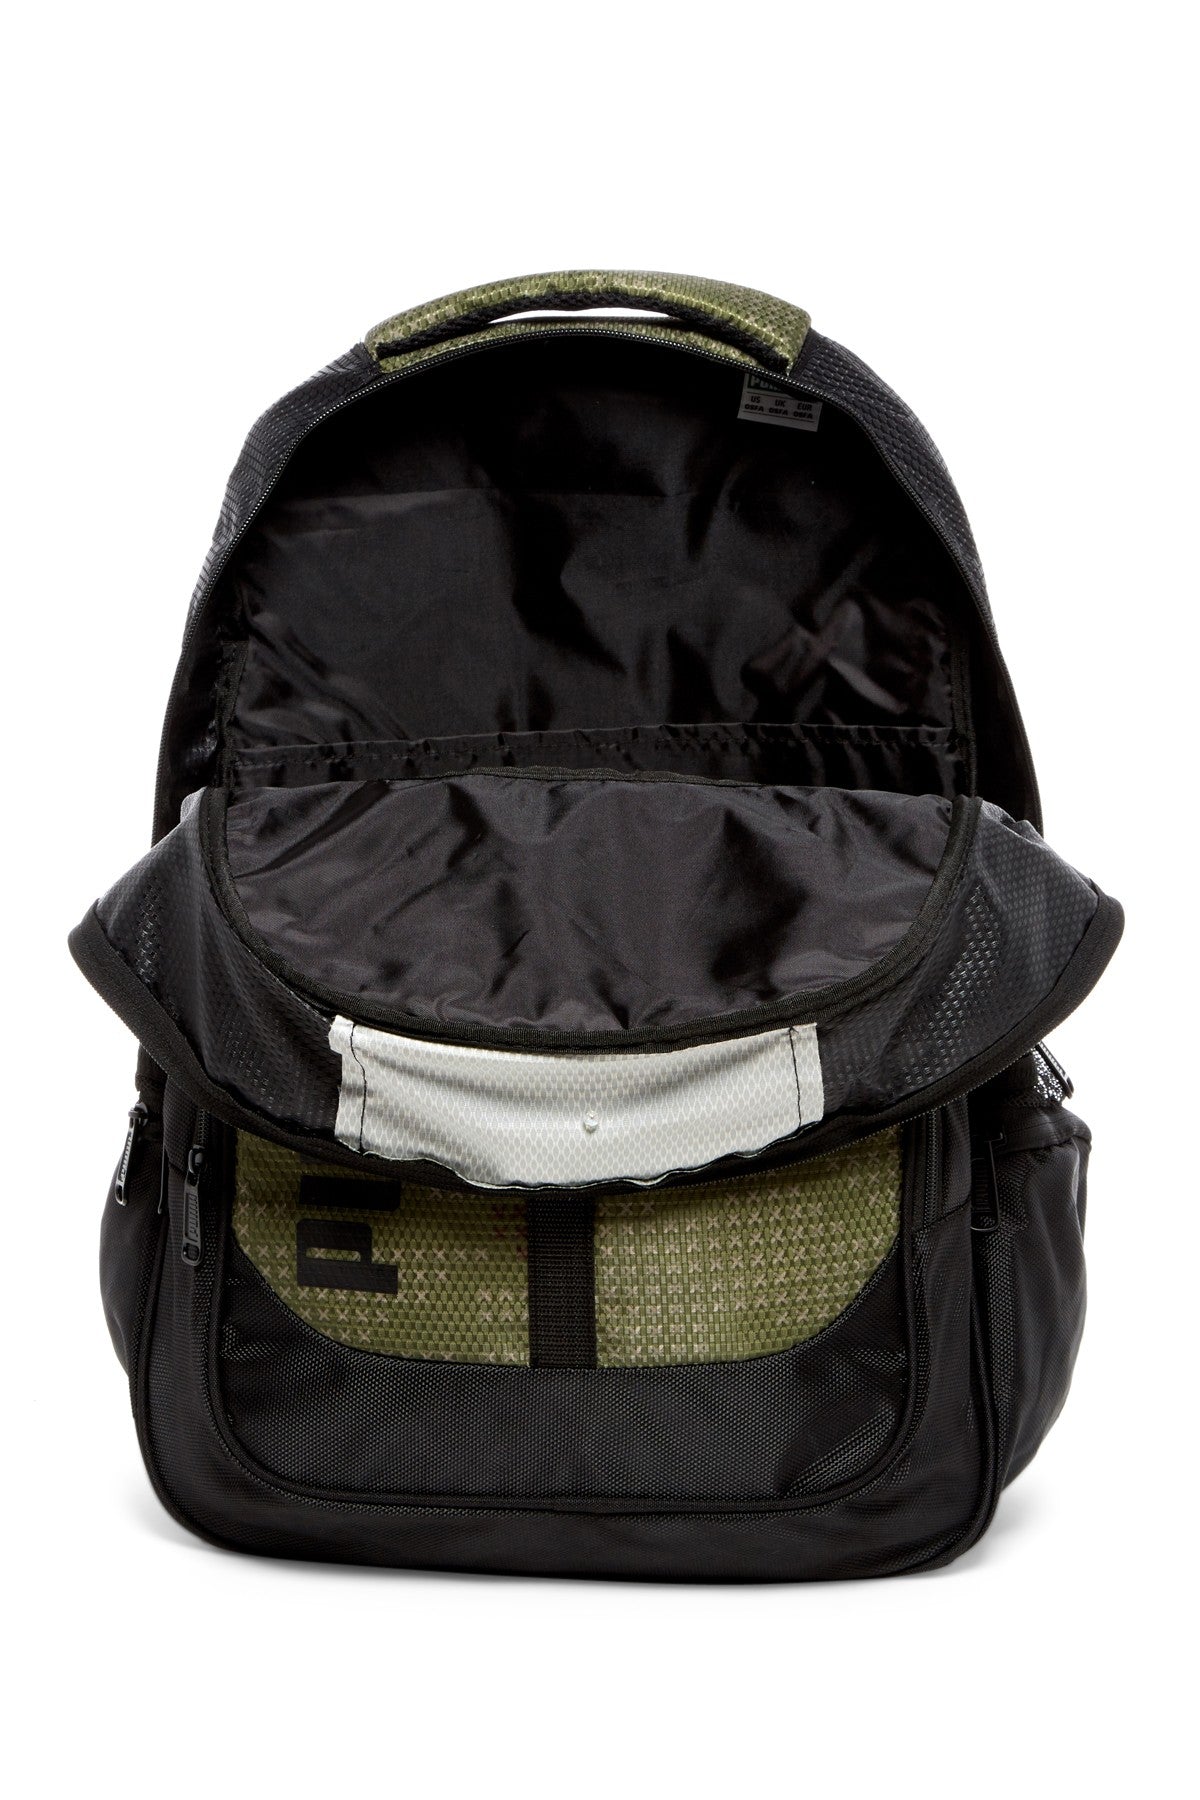 Puma Camo Audible 19” Backpack